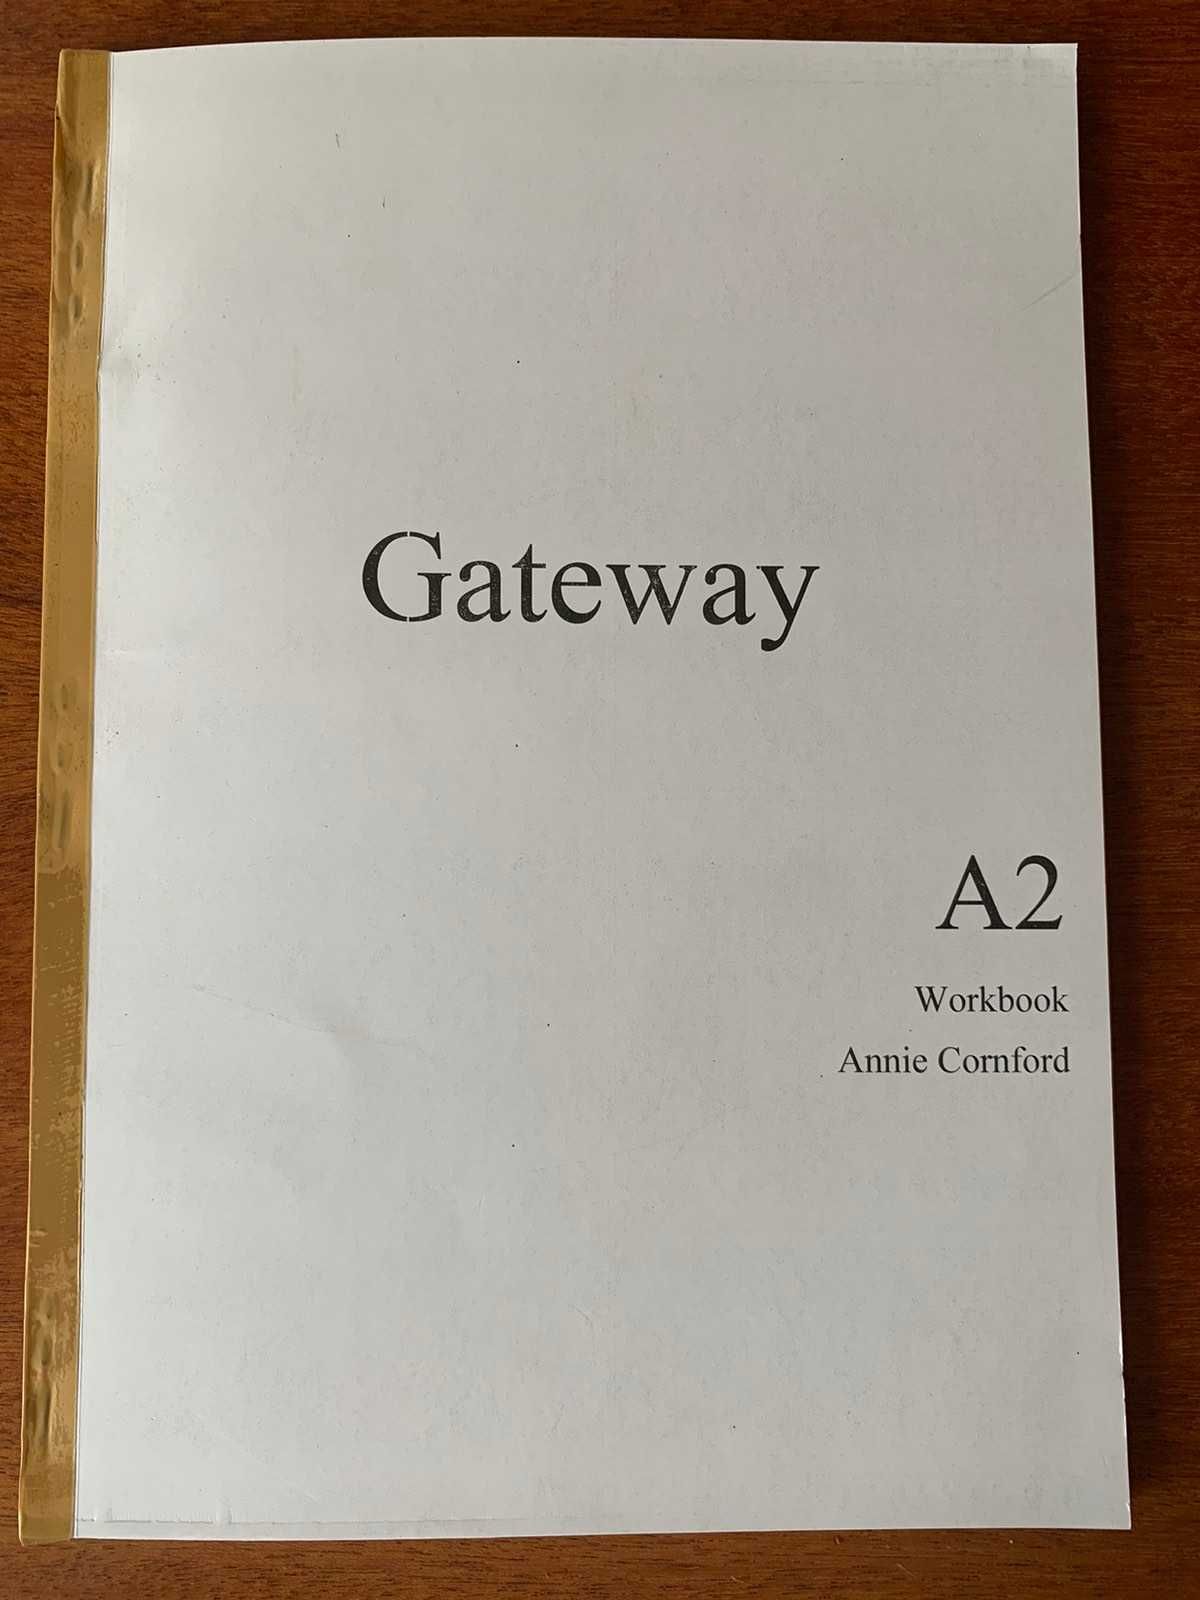 Gateway A2 workbook